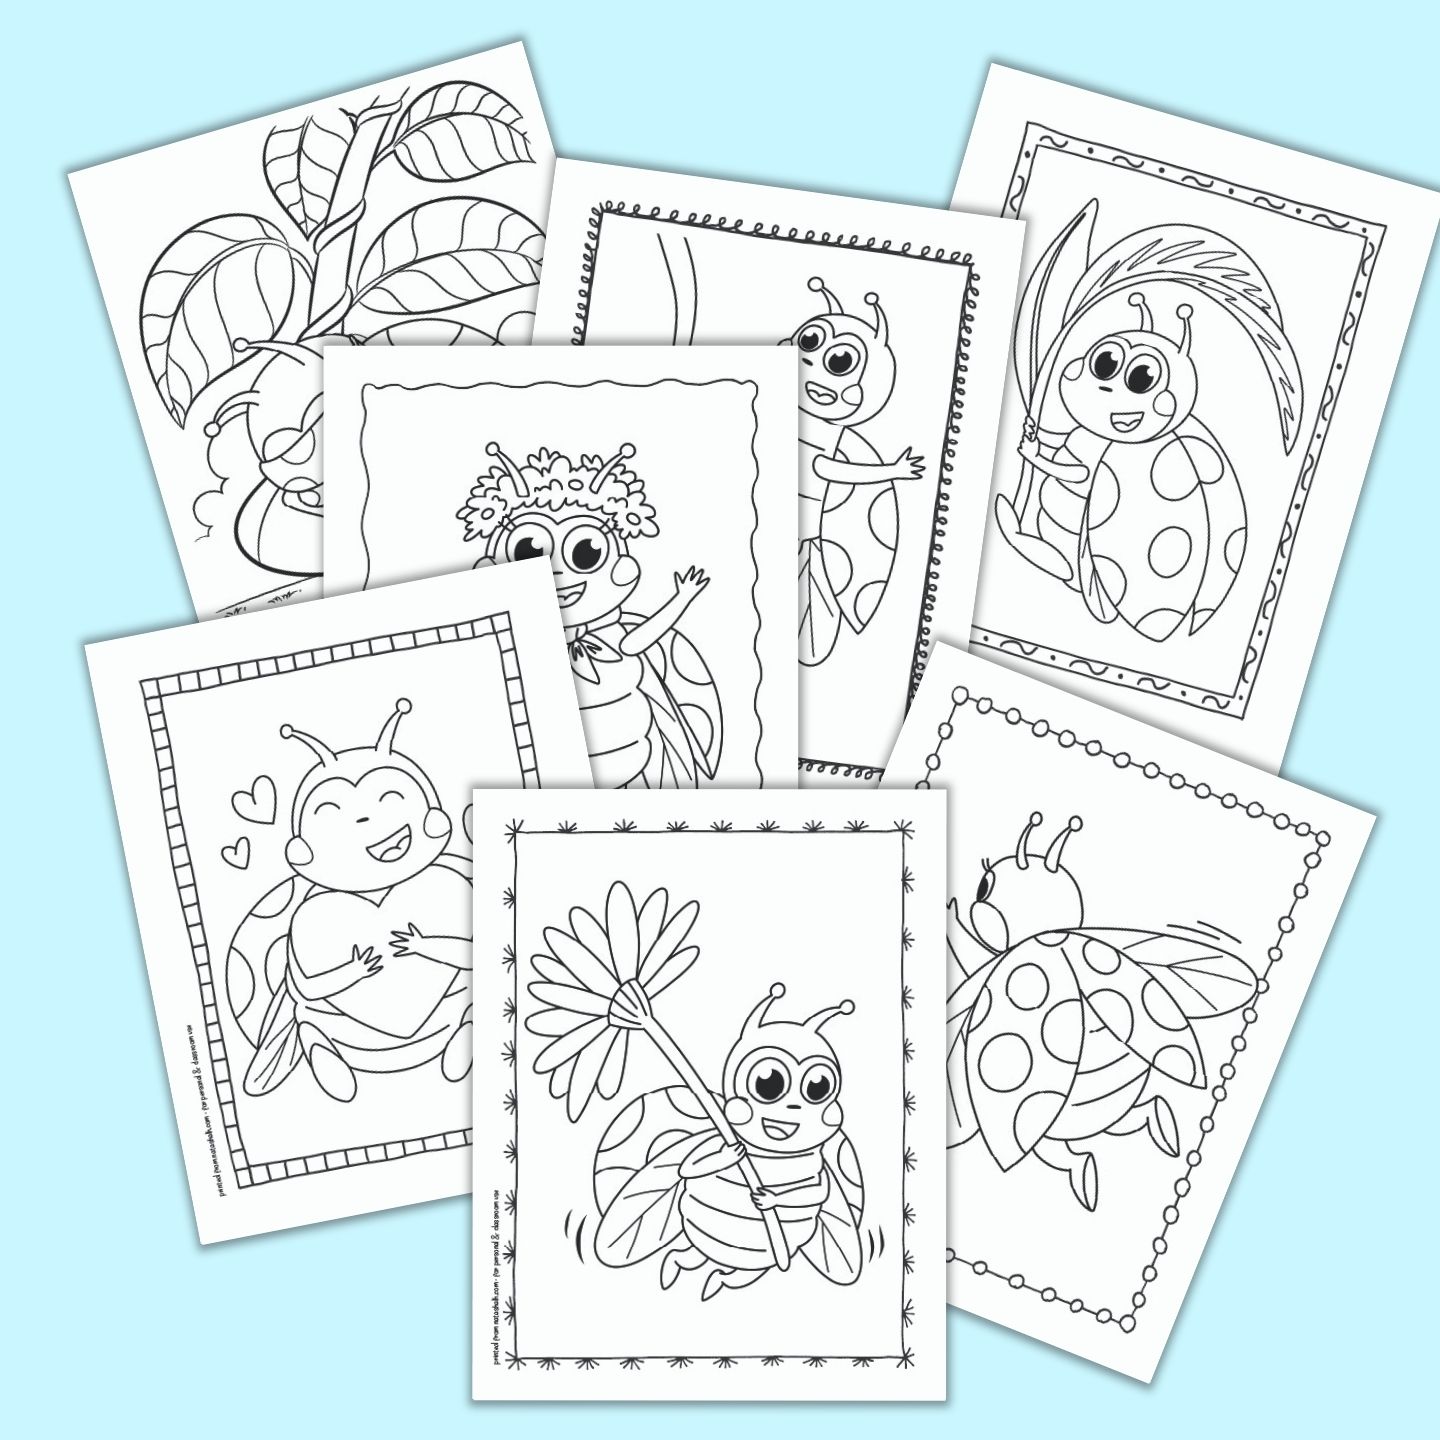 Download 15 Free Printable Ladybug Coloring Pages For Kids The Artisan Life